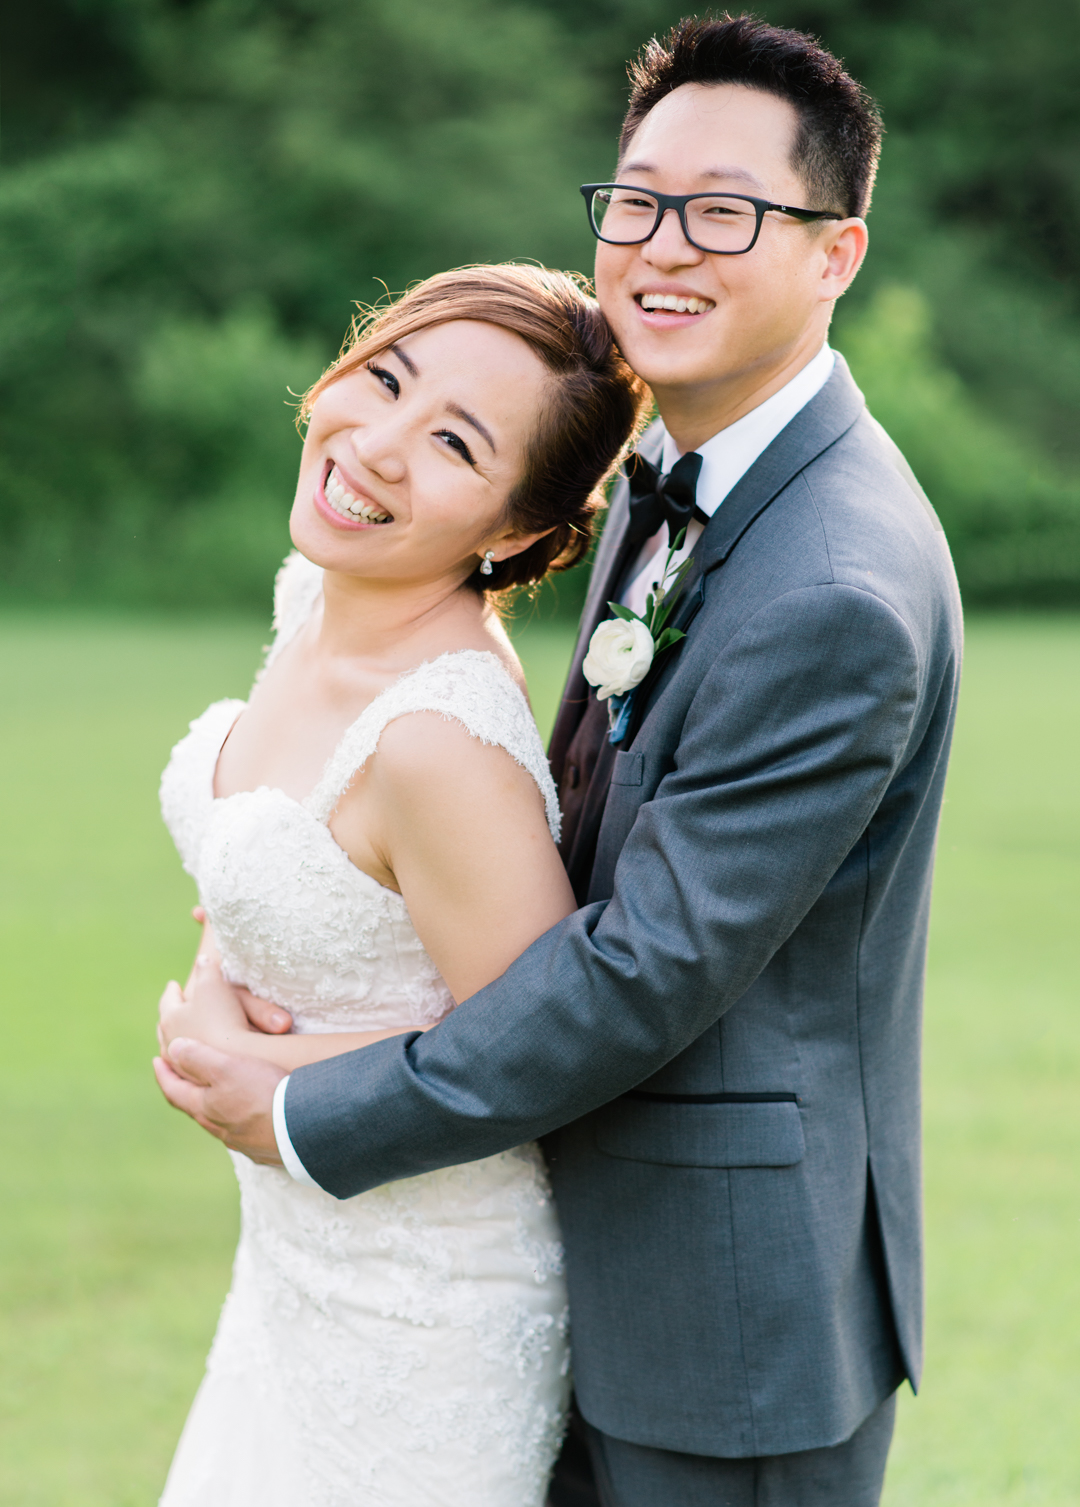 Just married, Atlanta's premier wedding photographer